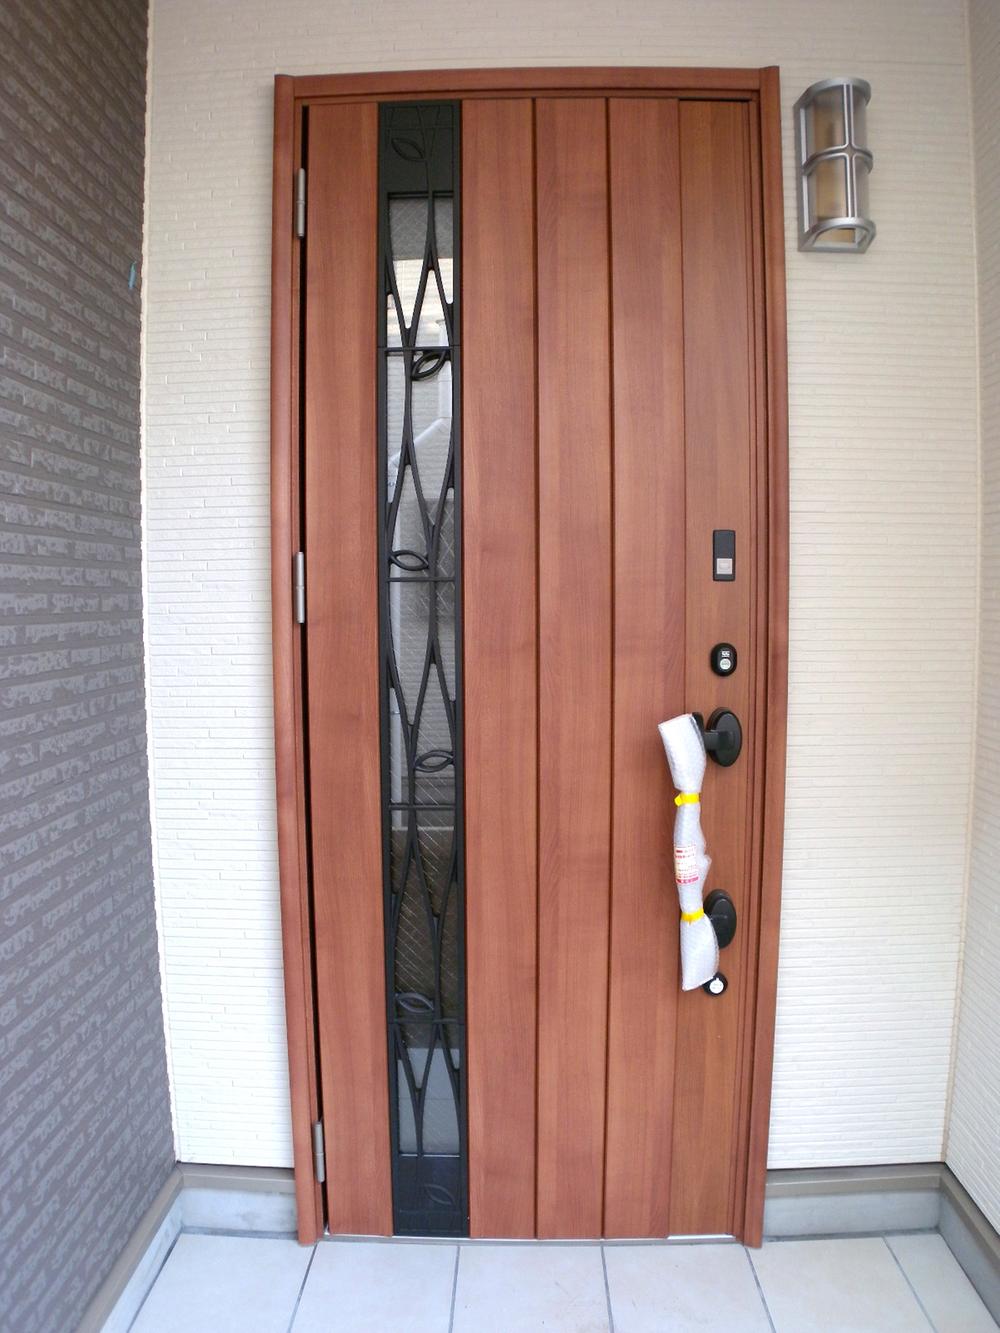 Entrance. Stylish wood grain type of entrance door [8 Building]